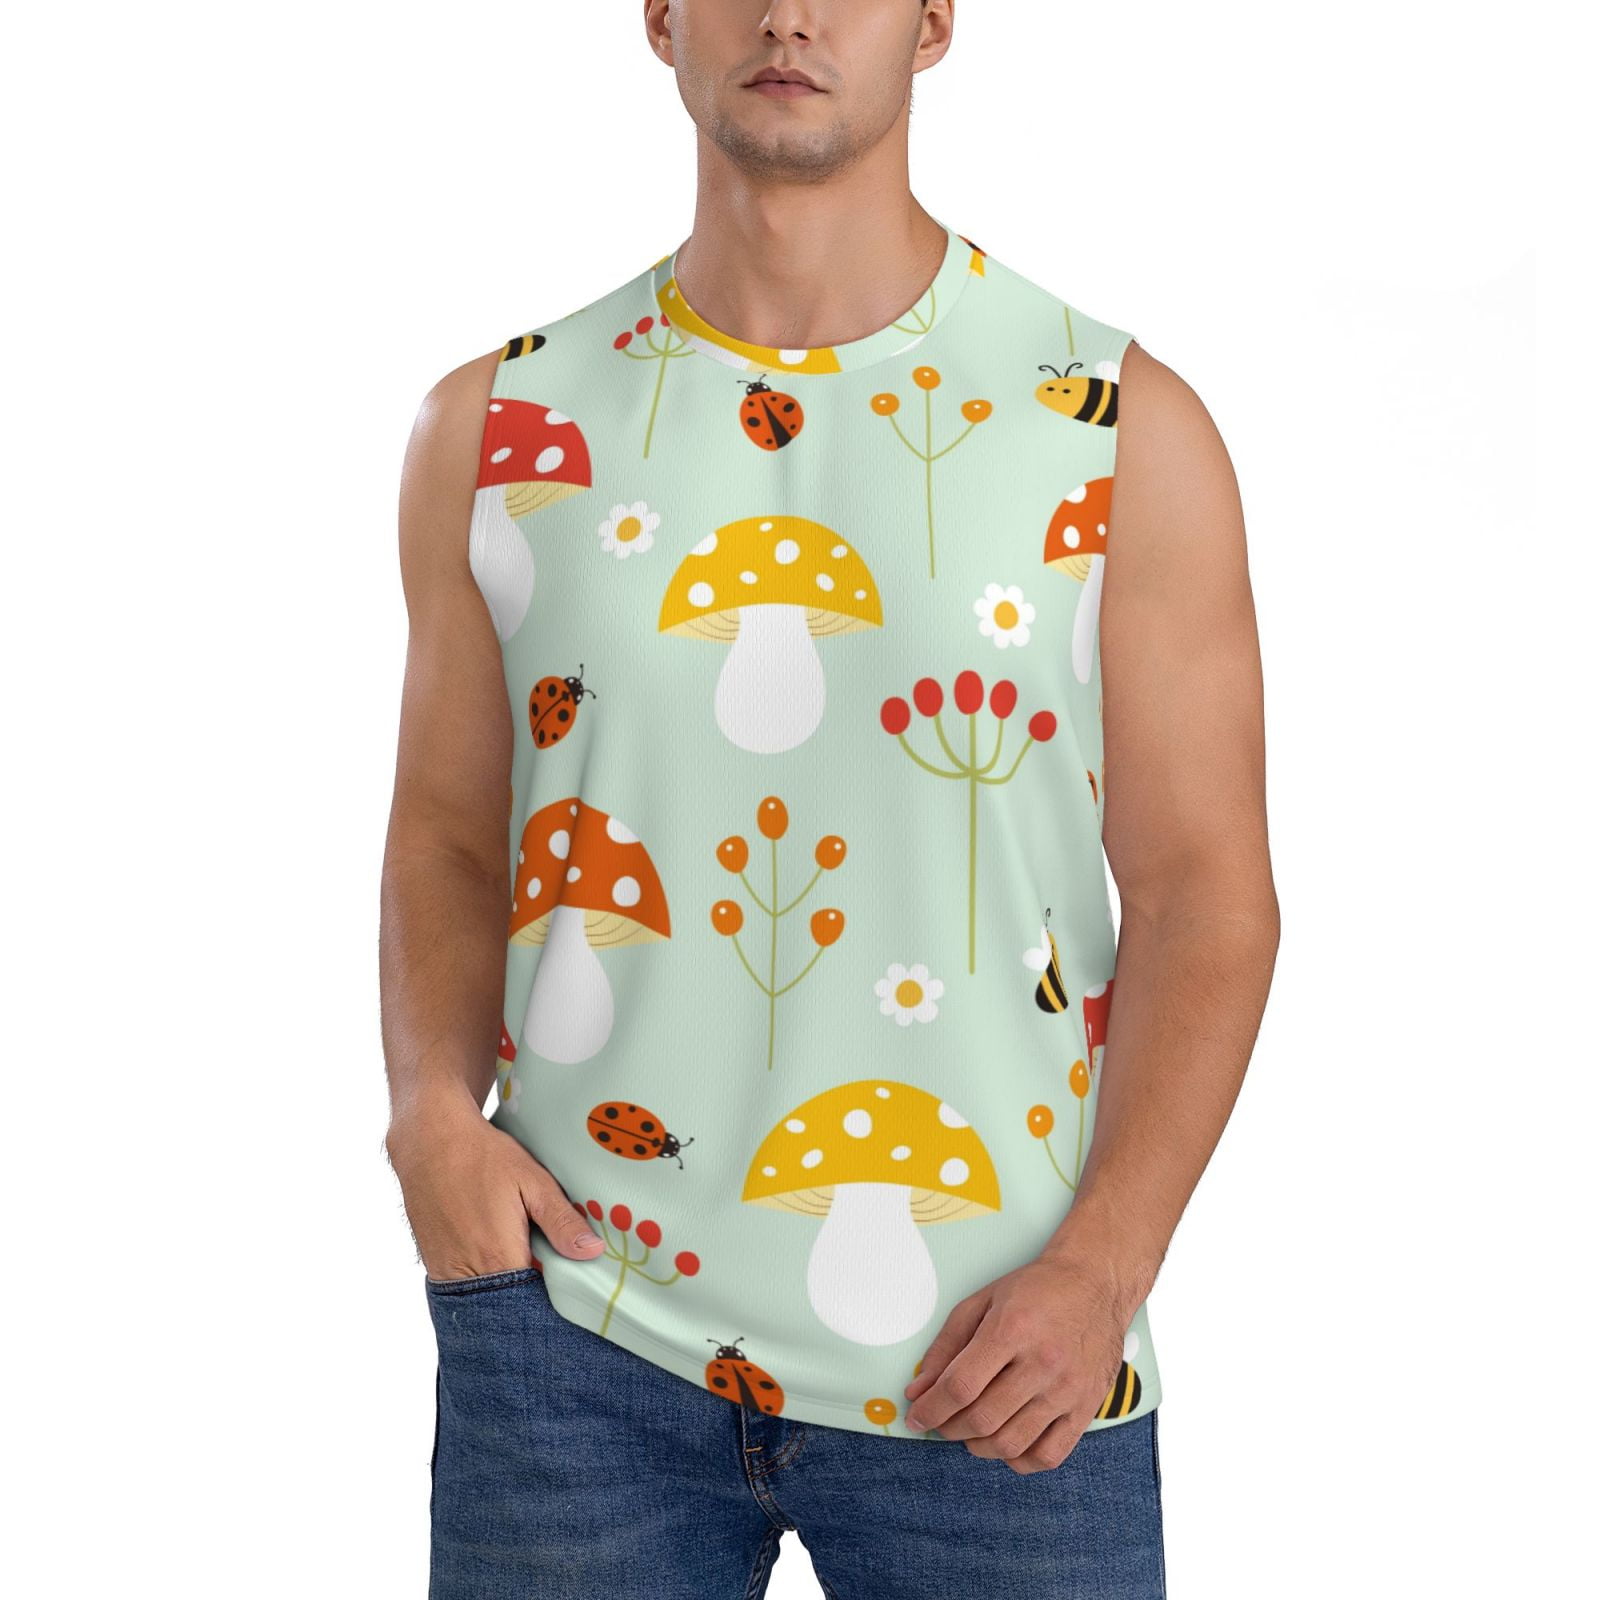 Gaeub Mushroom Bee Men's Sleeveless Muscle Shirts Workout Tank Tops ...